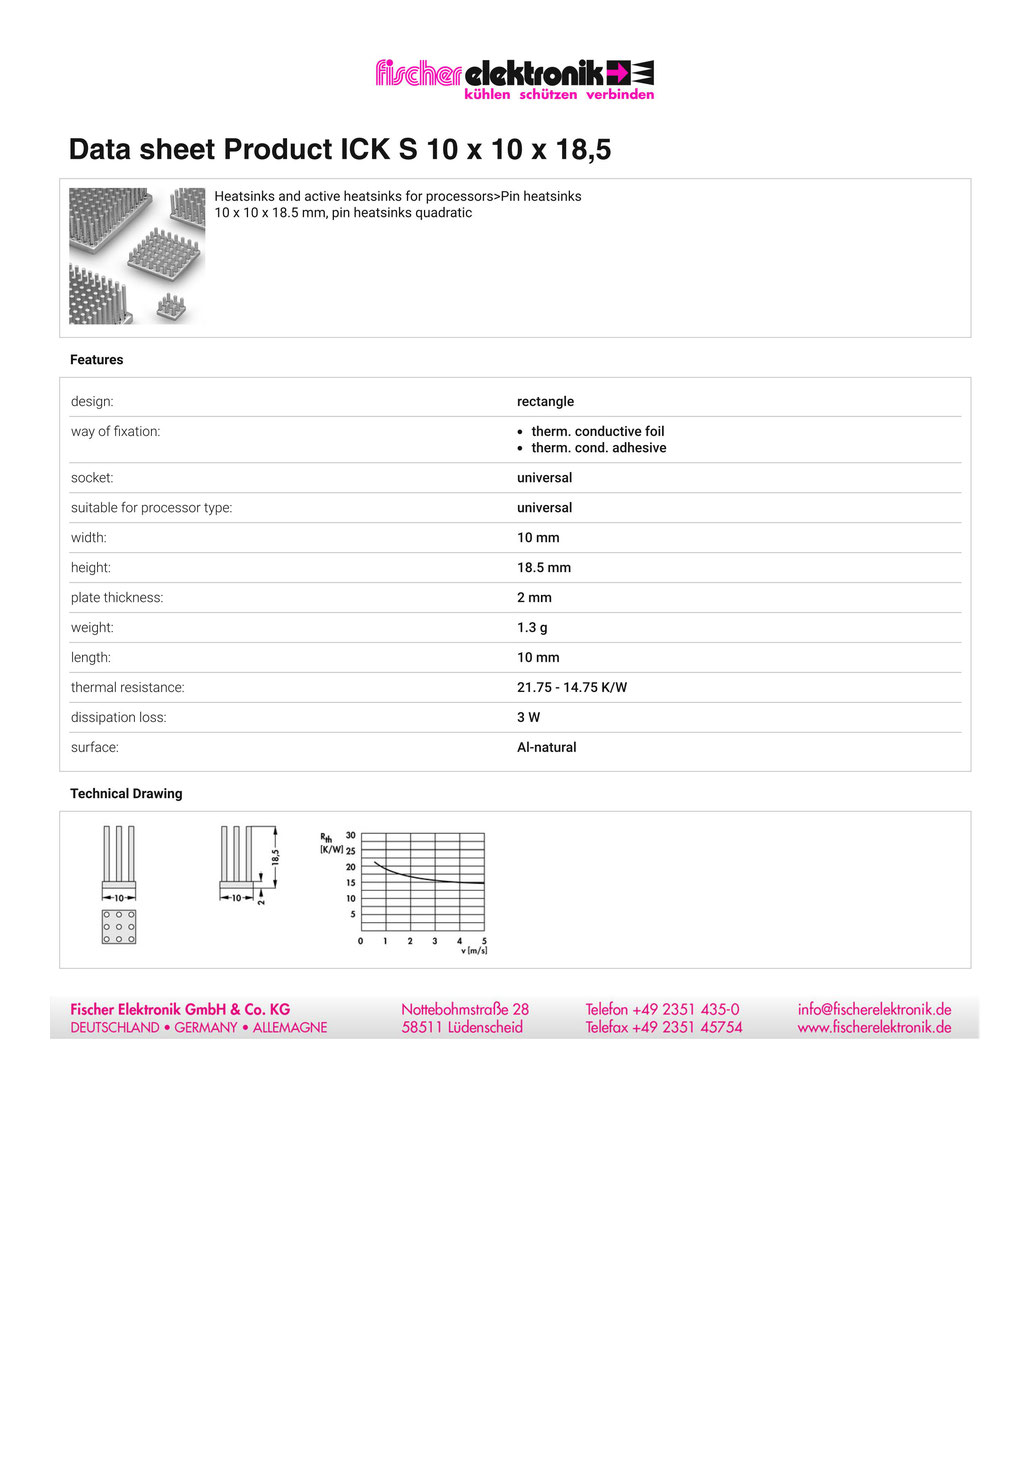 ICK S 10x10x18,5 | 角型ピンヒートシンク | Fischer Elektronik